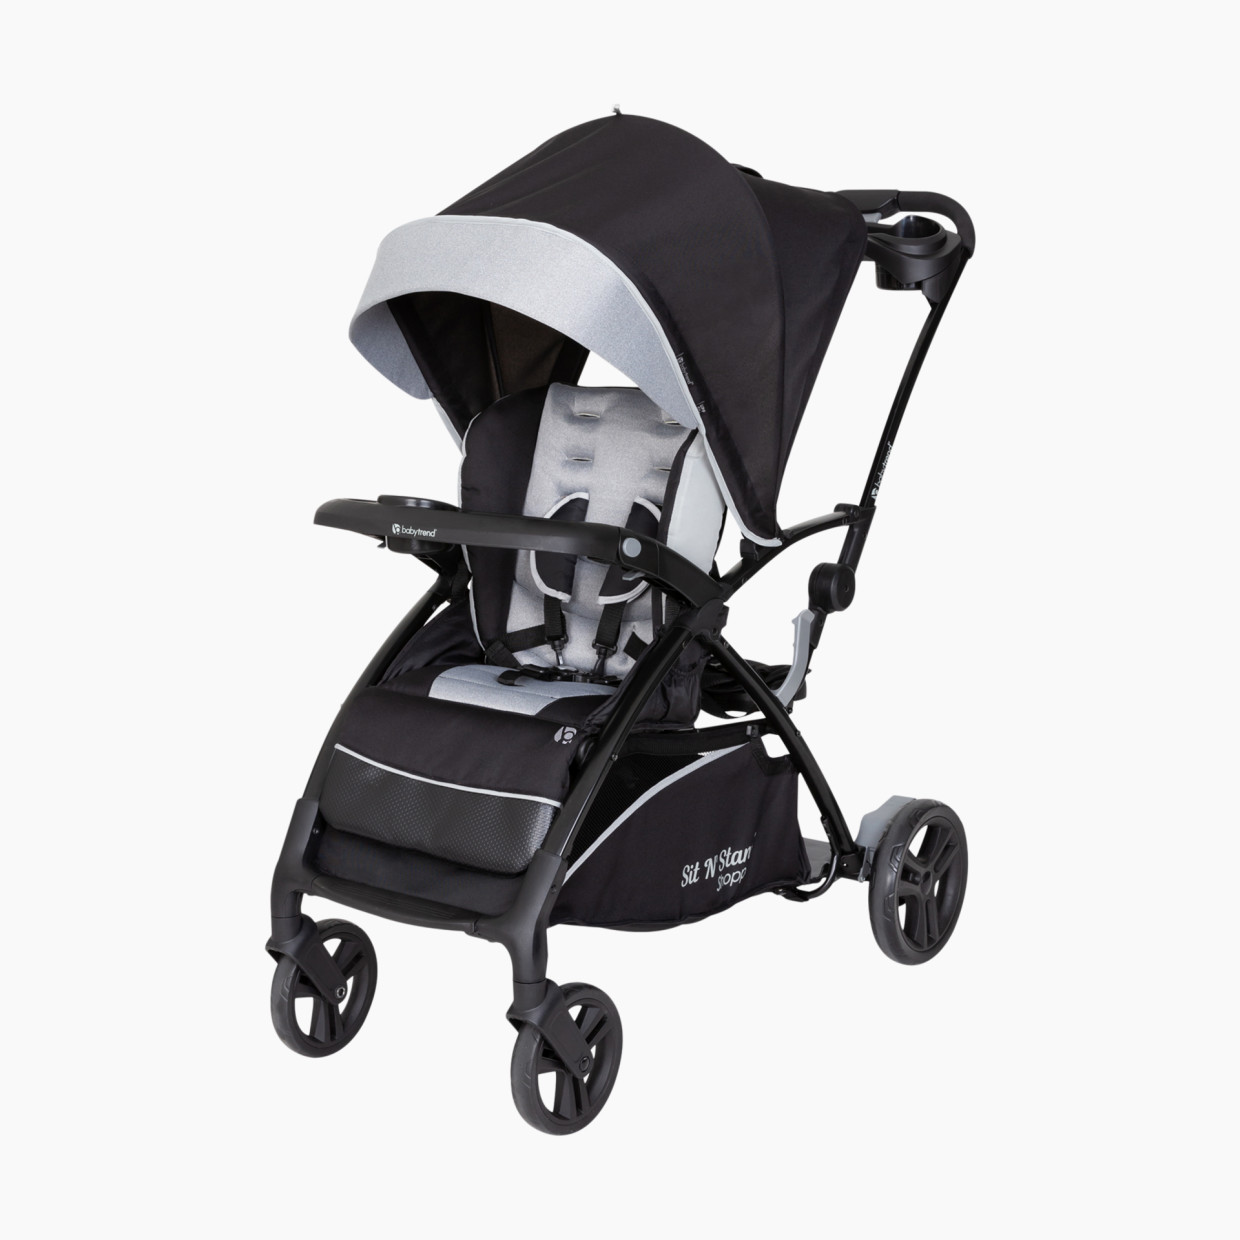 Baby Trend Sit N Stand 5-in-1 Shopper Stroller - Moondust.